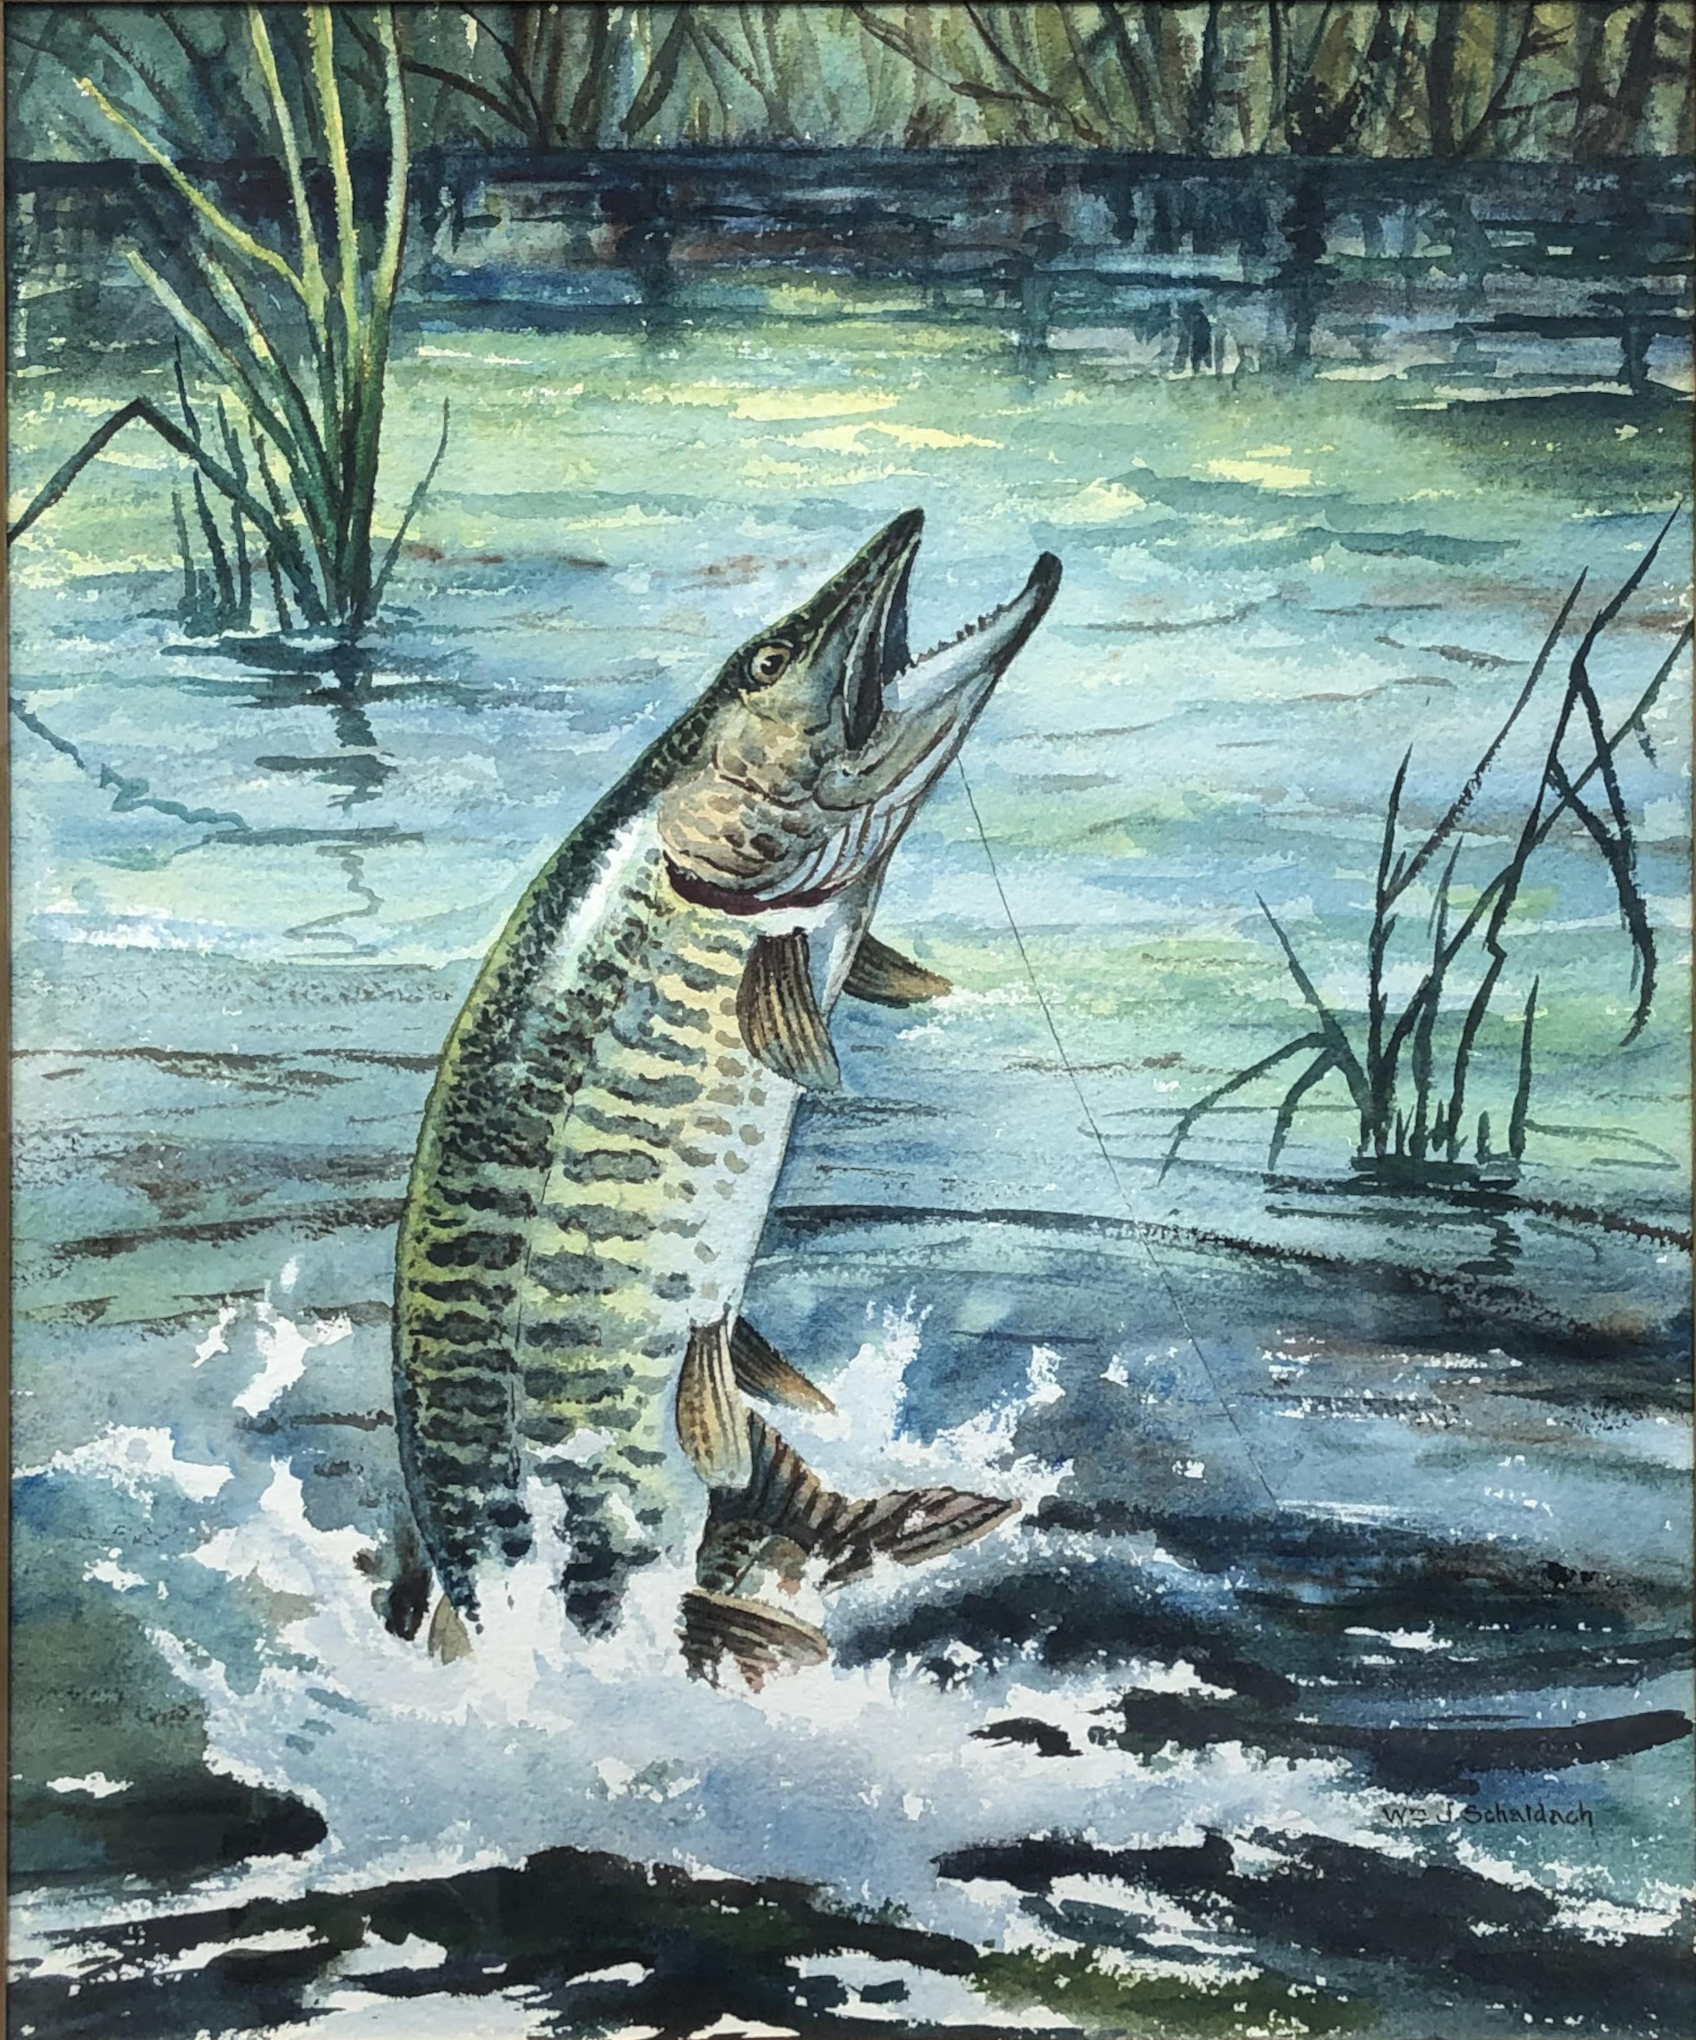 William Schaldach - Northern Pike, Watercolor, 17.5 x 13.75 inches